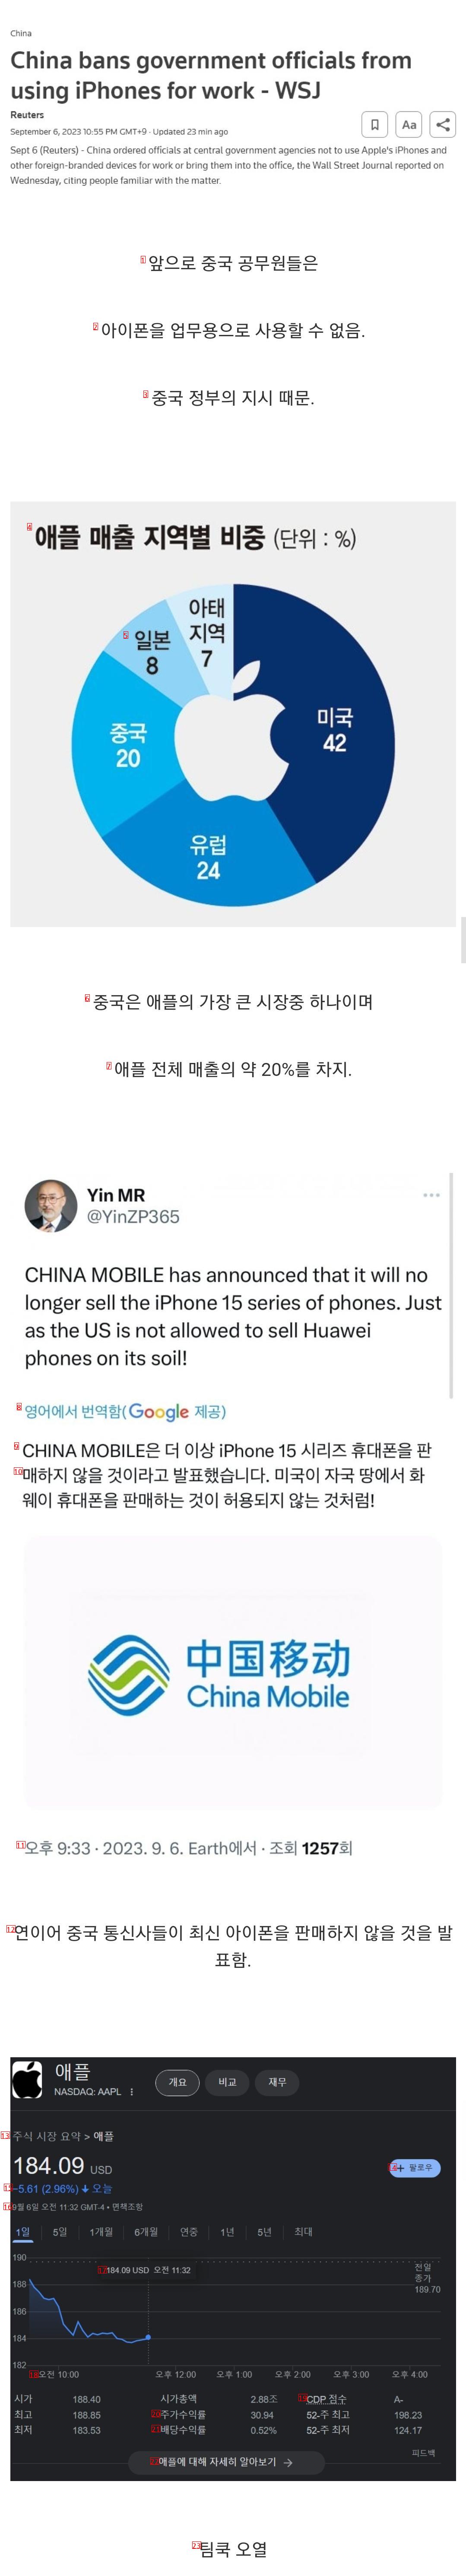 中国、今後公務員のiPhone使用禁止